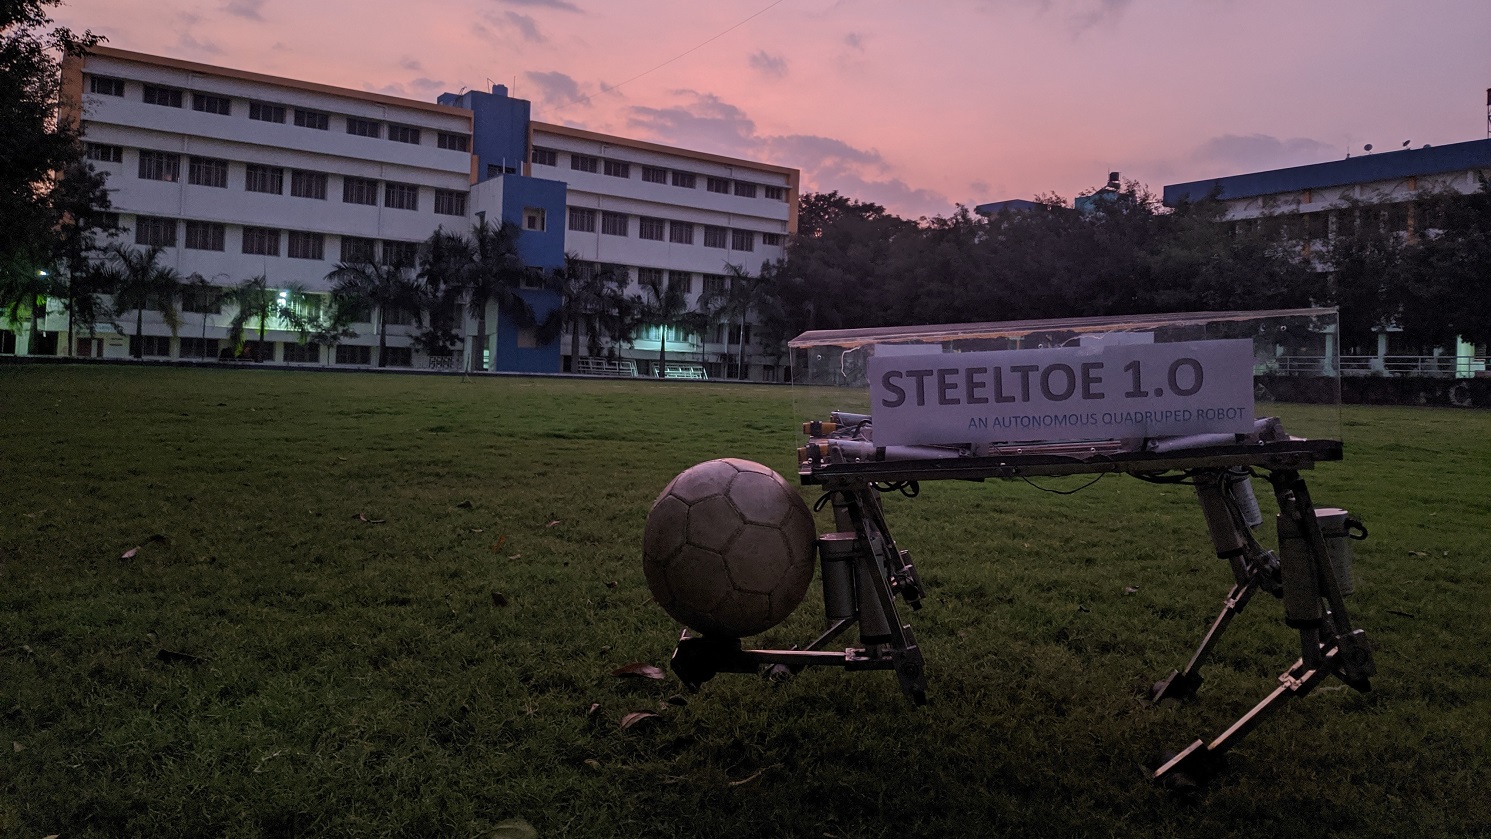 Steeltoe-evening-team-automatons